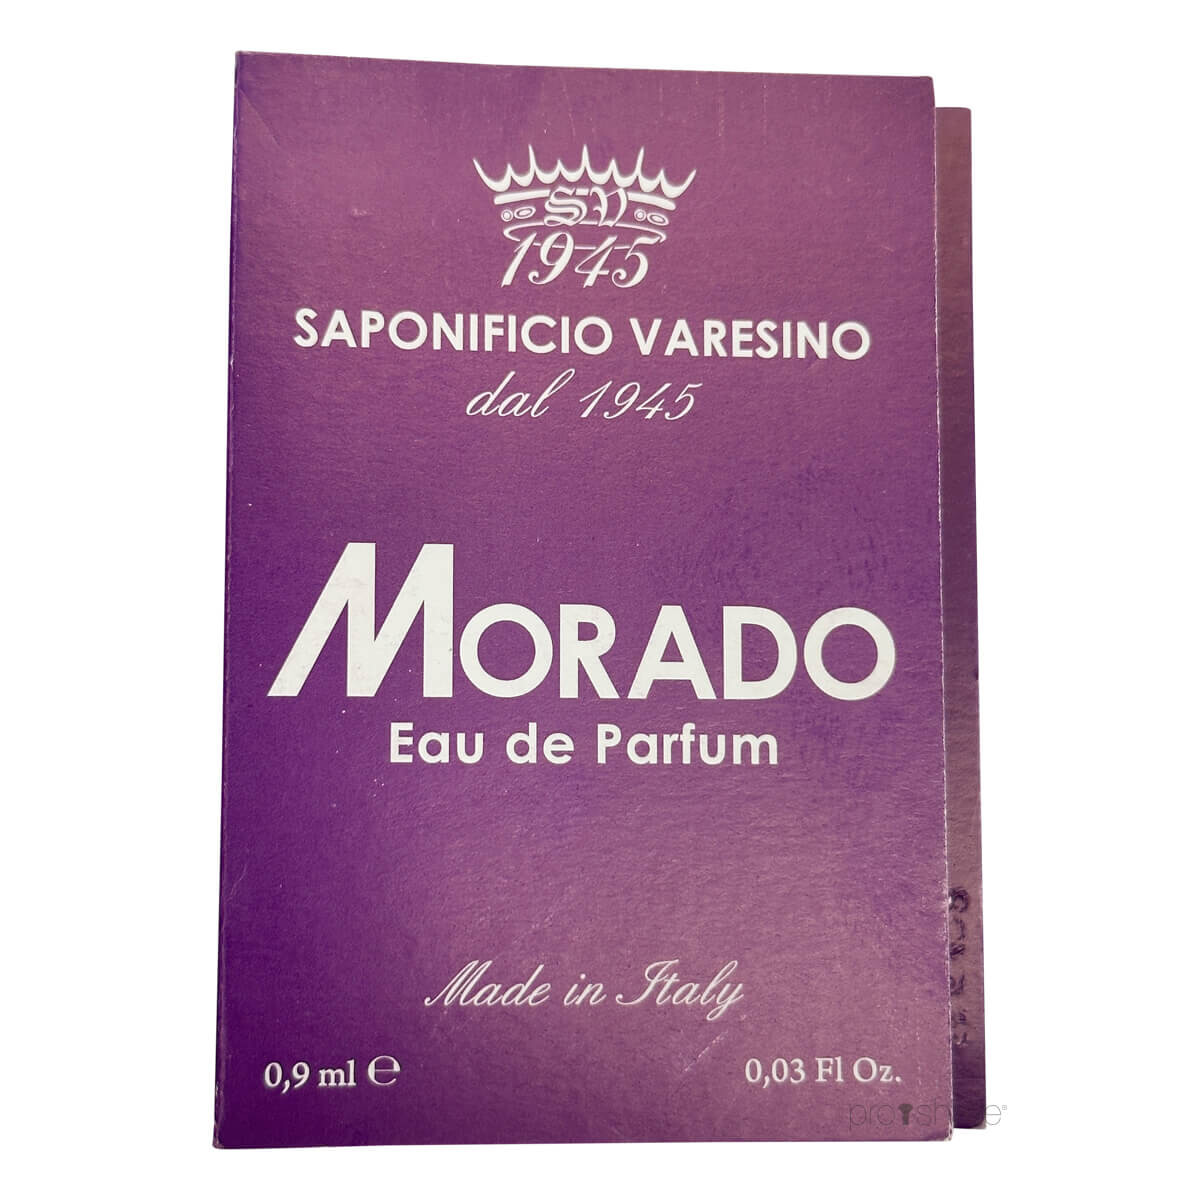 Billede af Saponificio Varesino Eau de Parfum, Morado, Sample, 0.9 ml.